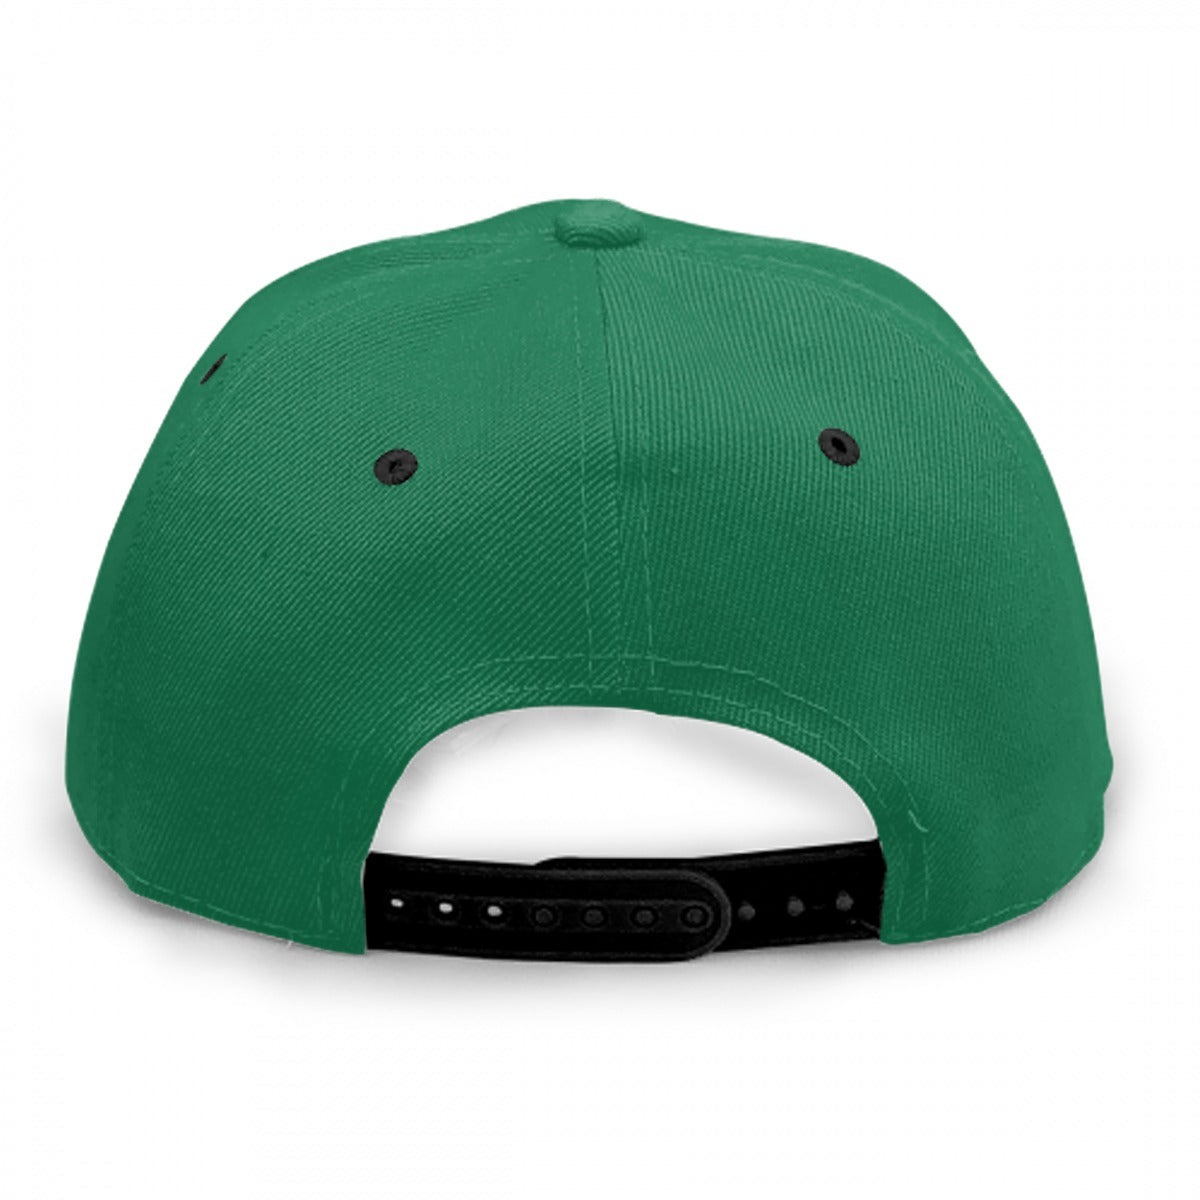 POLYCHROME FLORAL Baseball Cap - Green | Outfique | Hats |